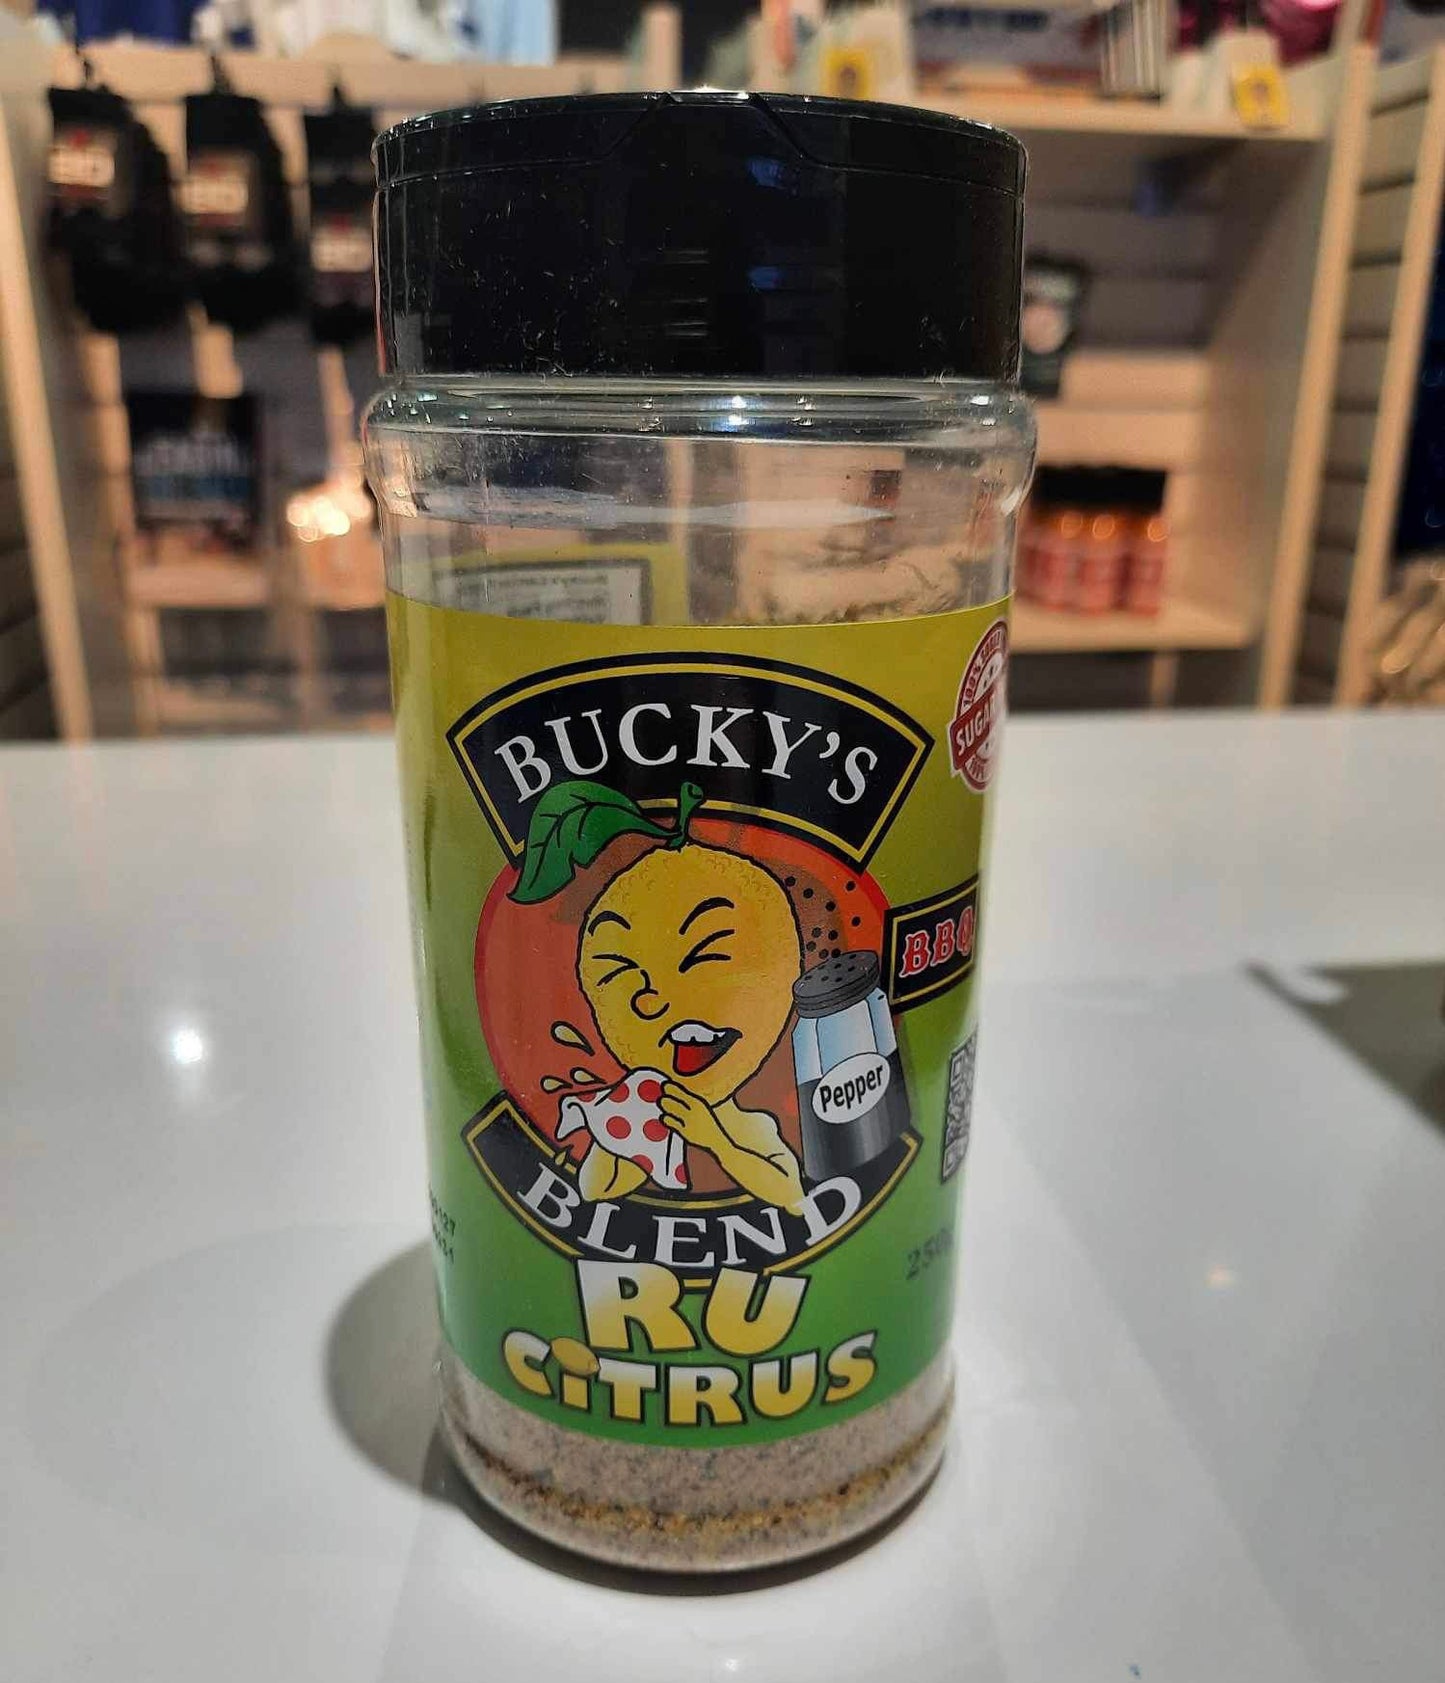 Bucky's "R U Citrus" BBQ Blend